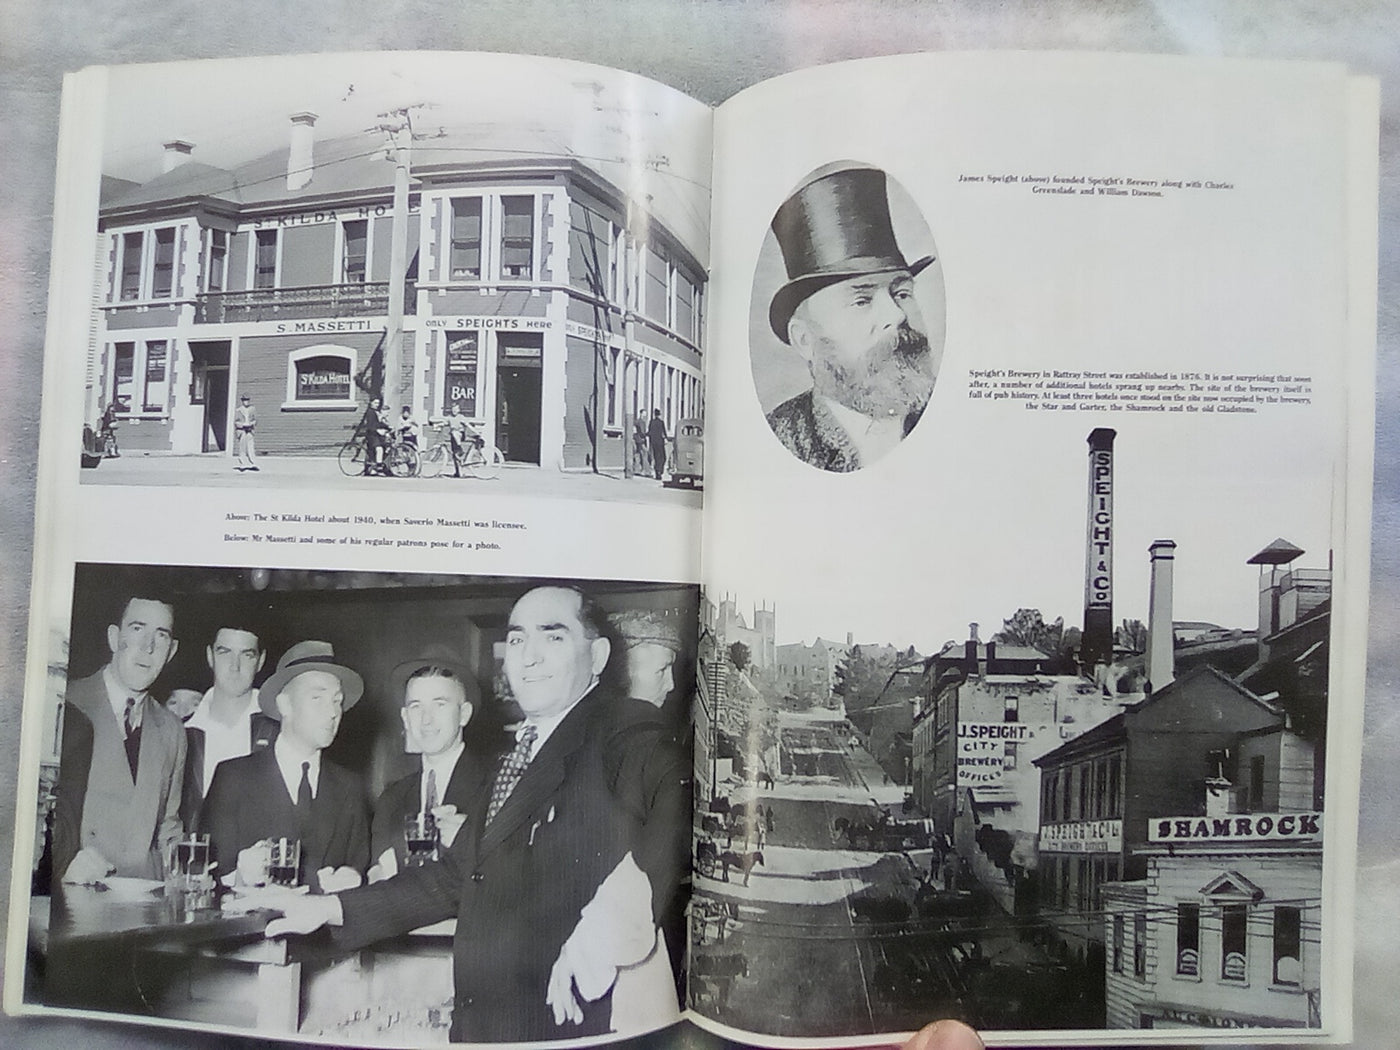 Pubs Galore - History of Dunedin Hotels 1848-1984